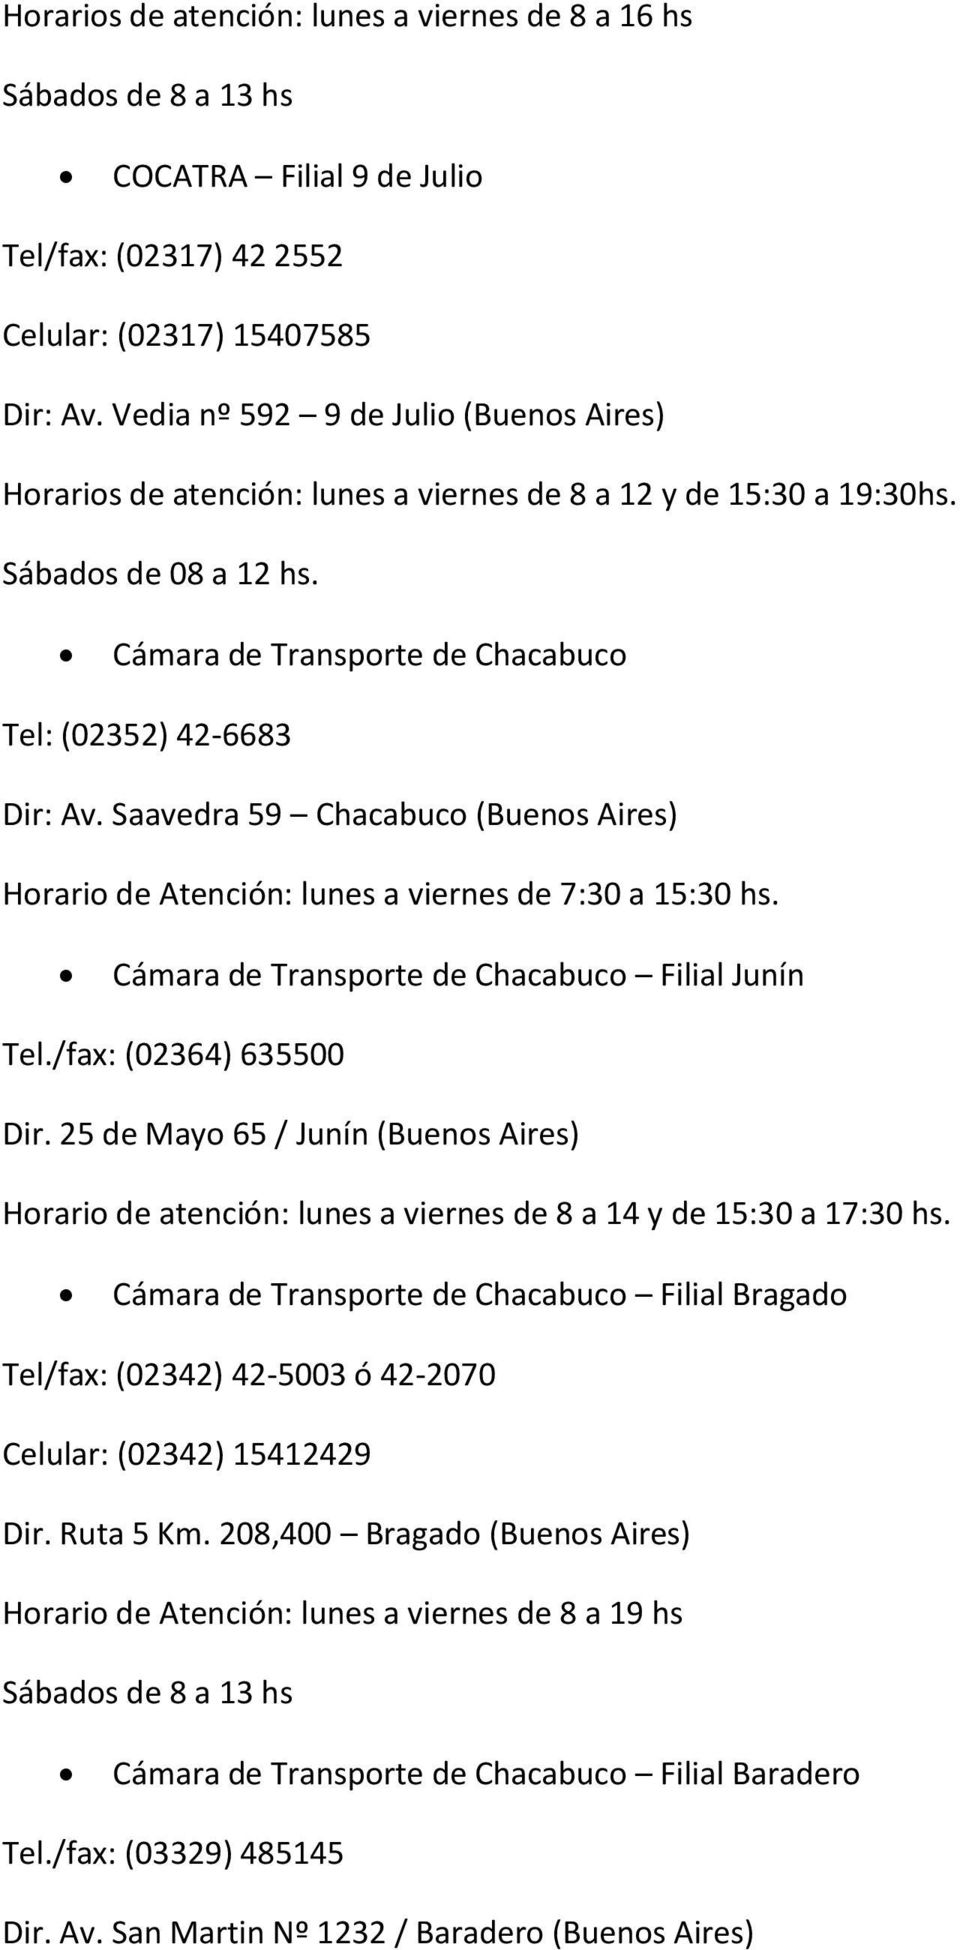 Saavedra 59 Chacabuco (Buenos Aires) Horario de Atención: lunes a viernes de 7:30 a 15:30 hs. Cámara de Transporte de Chacabuco Filial Junín Tel./fax: (02364) 635500 Dir.